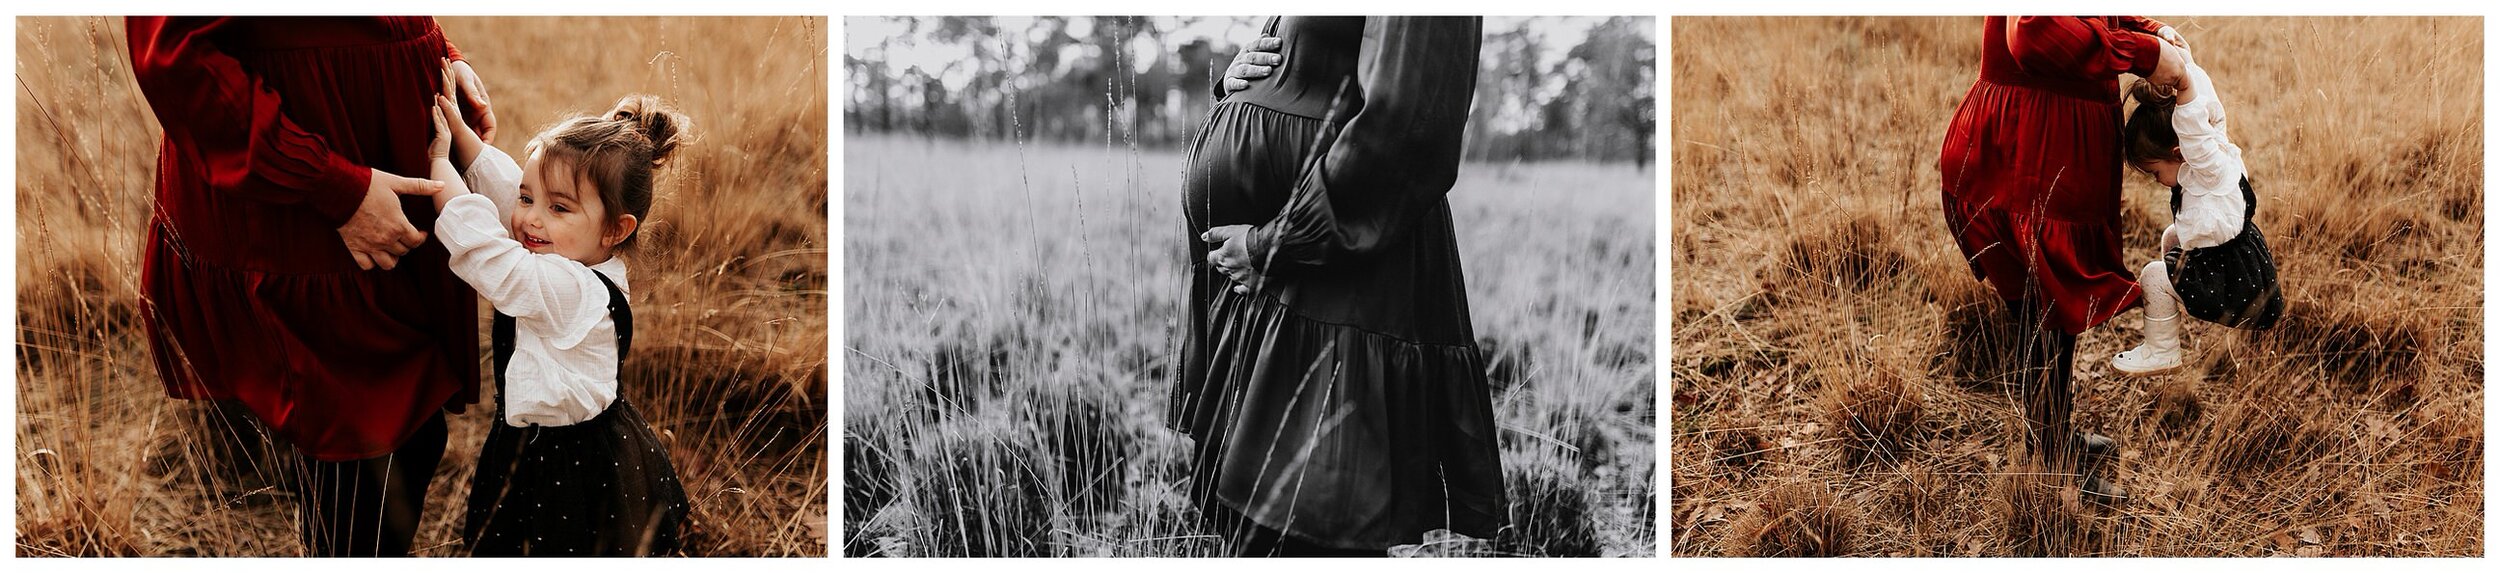 zwangerschapsfotografie-zwangerschapsfoto-zwangerschapsfotograaf-lisa-helsen-photography-herentals-kempen-olen-westerlo-geel-turnhout_0005.jpg